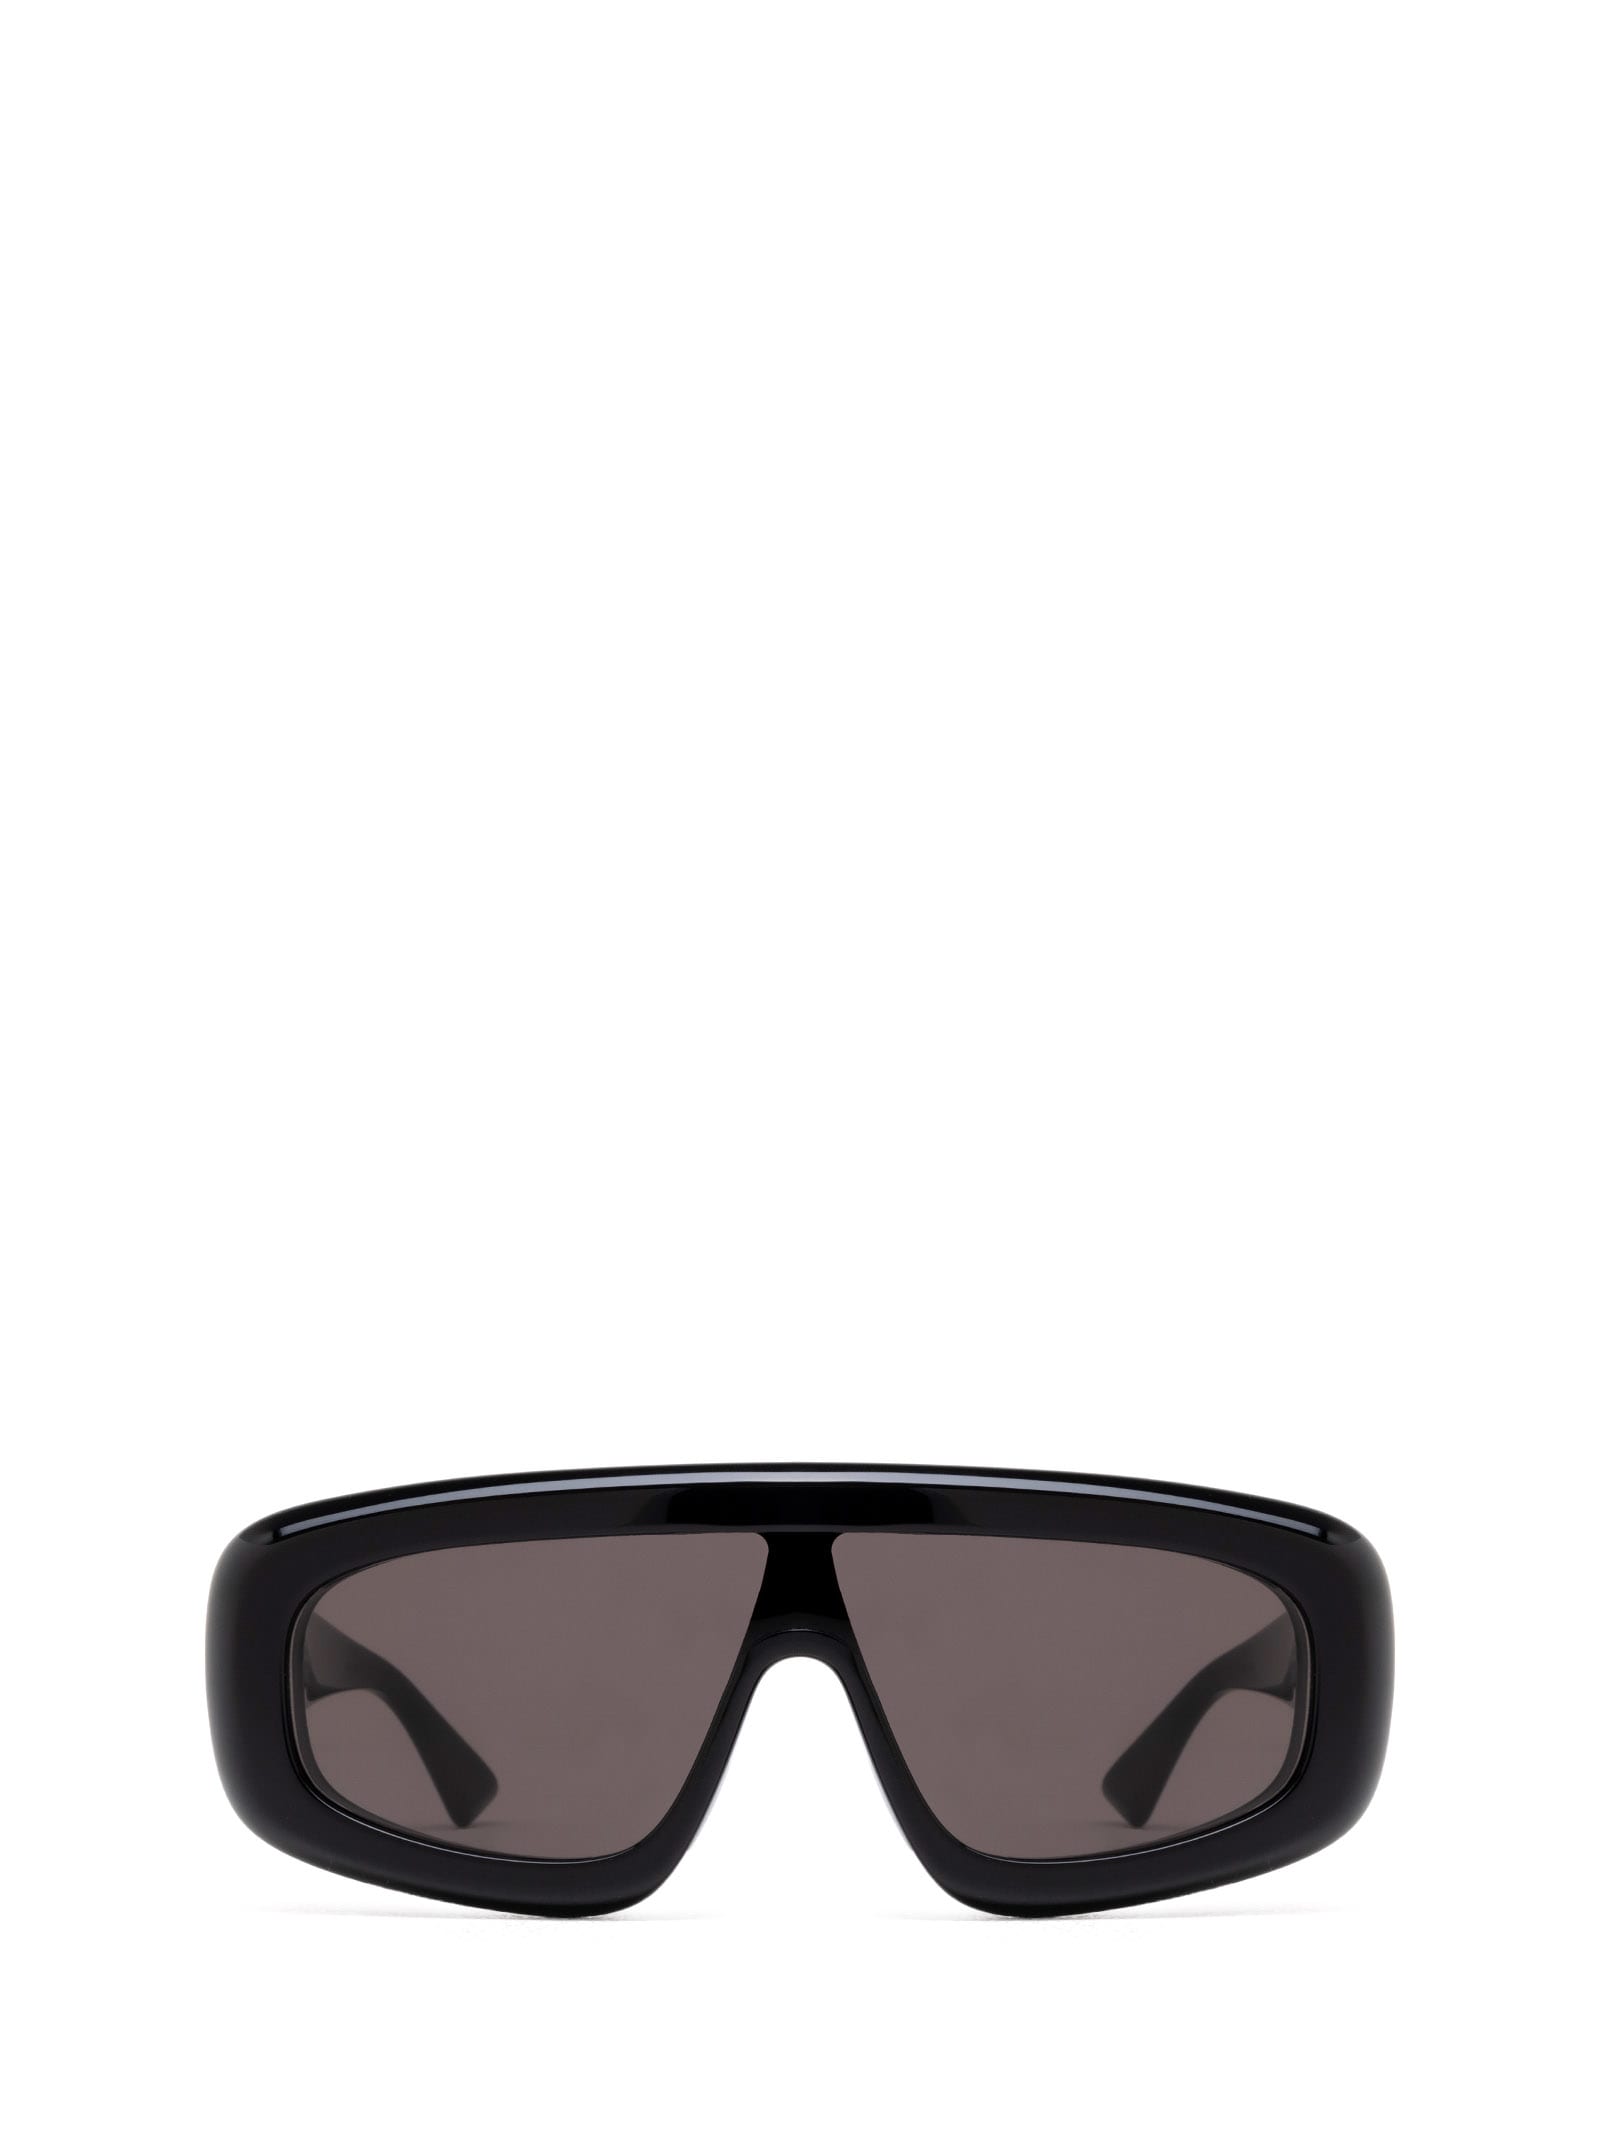 Bv1281s Black Sunglasses